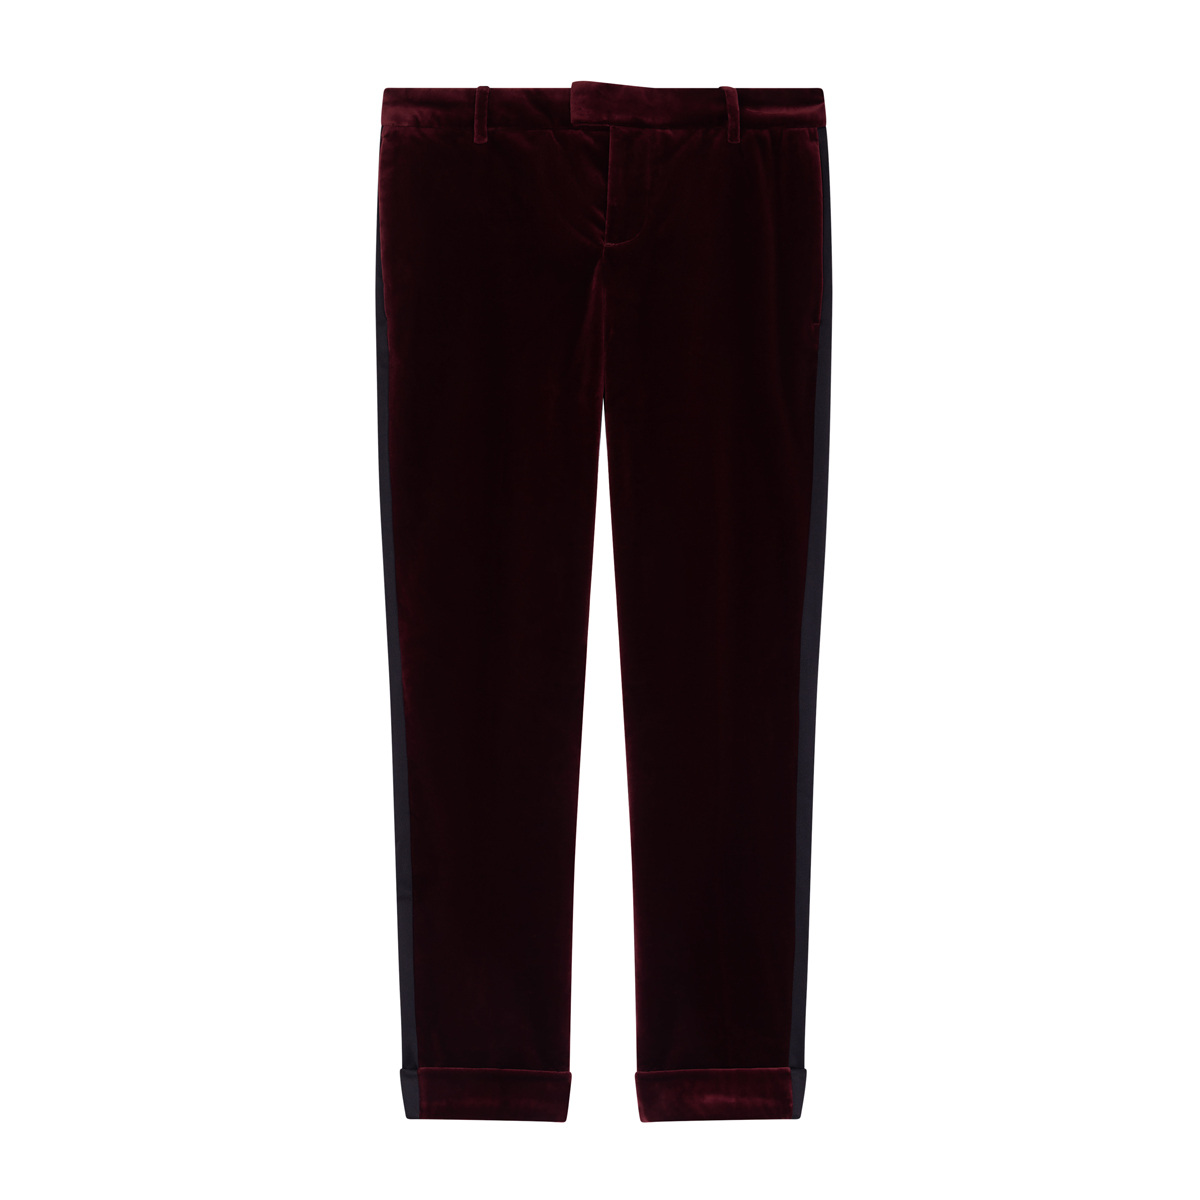 Tuxedo Pants Claude, Ruby - 7/8 cut with large lapel - Viscose / Satin - image 1